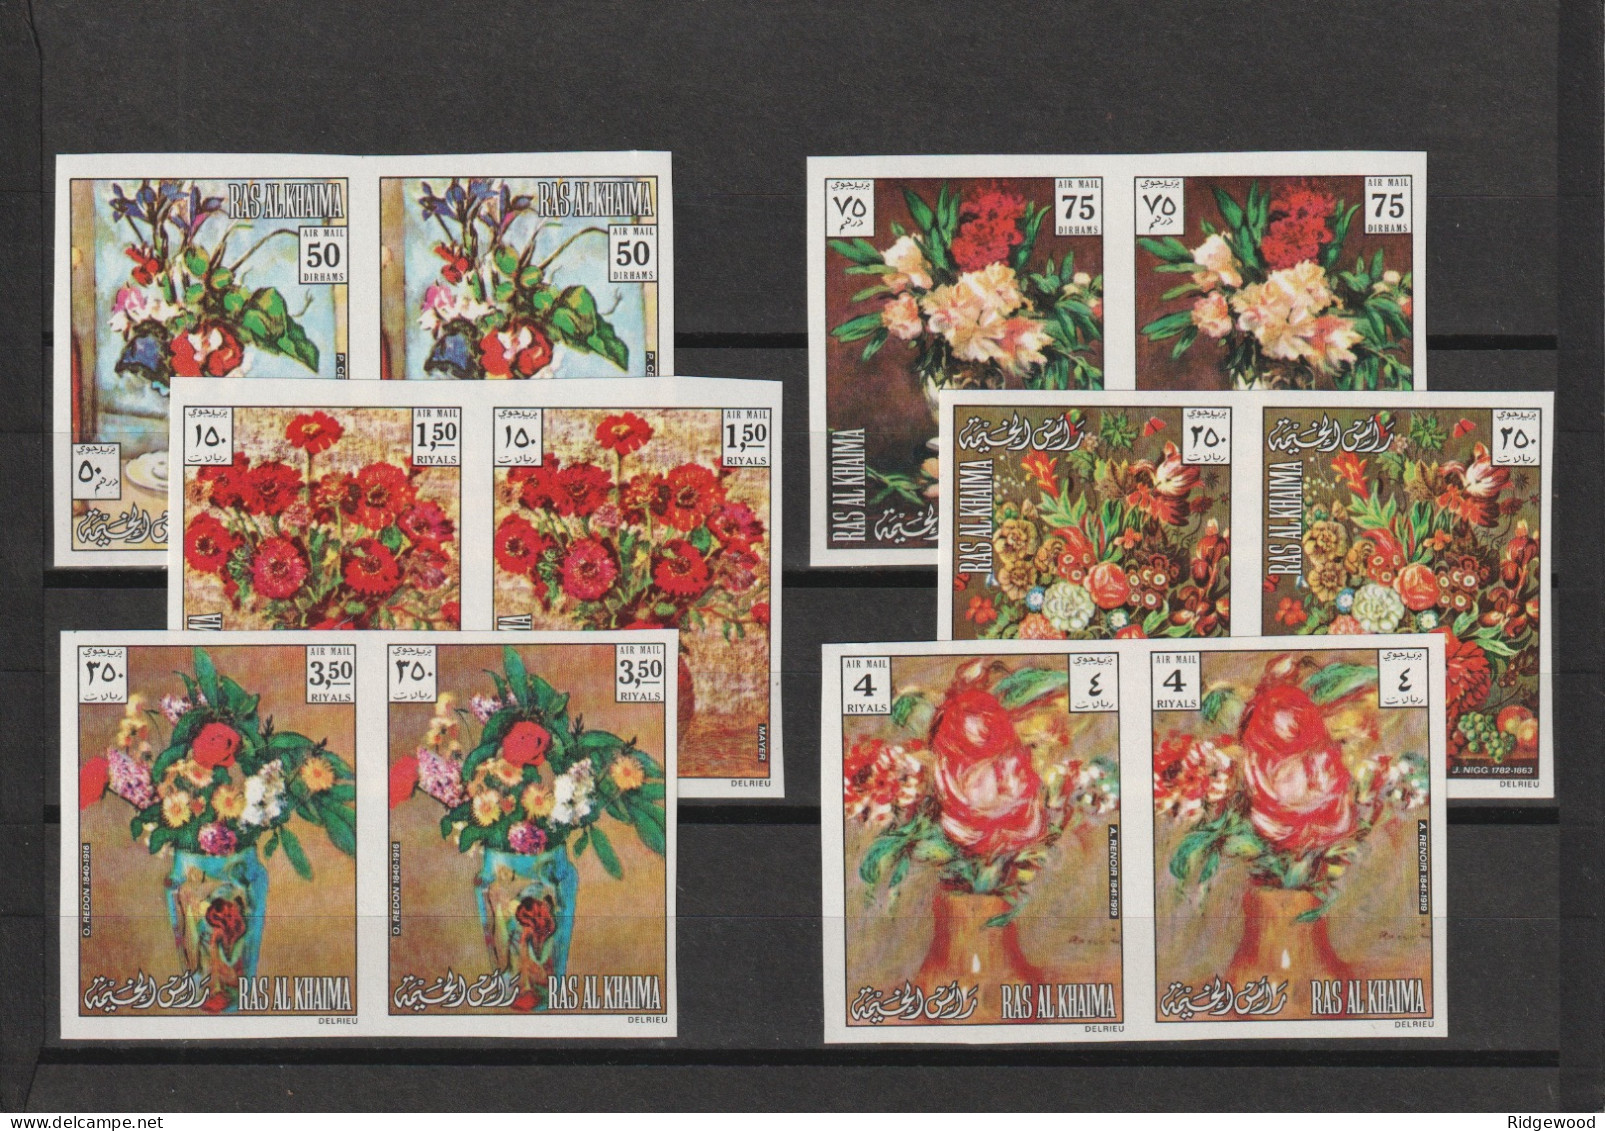 1972  Ras Al Khaima - Flower Paintings - Two Complete Sets -  Mi 865-870 Imperf. Marginal Pairs - MNH/UMM - Ras Al-Khaimah